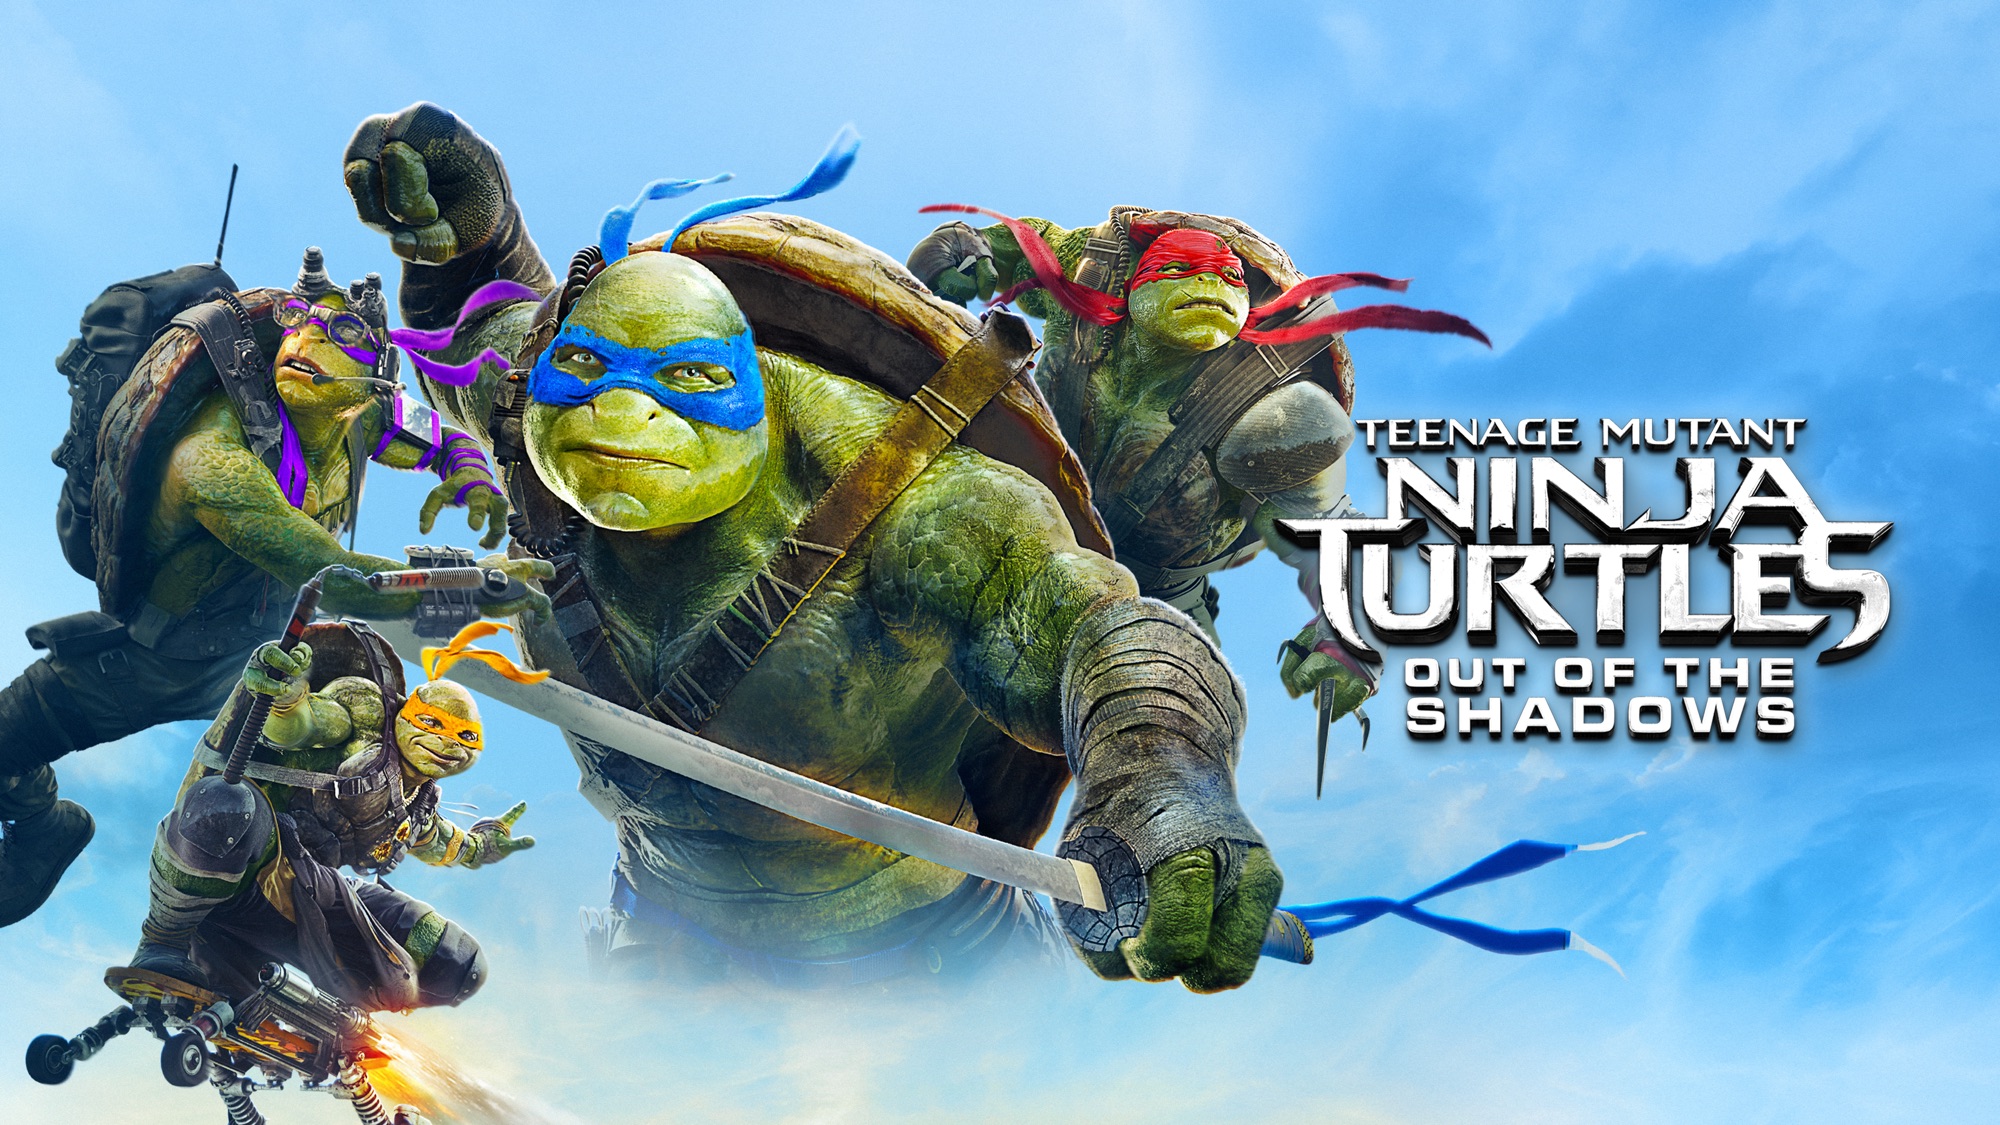 Teenage Mutant Ninja Turtles: out of the Shadows